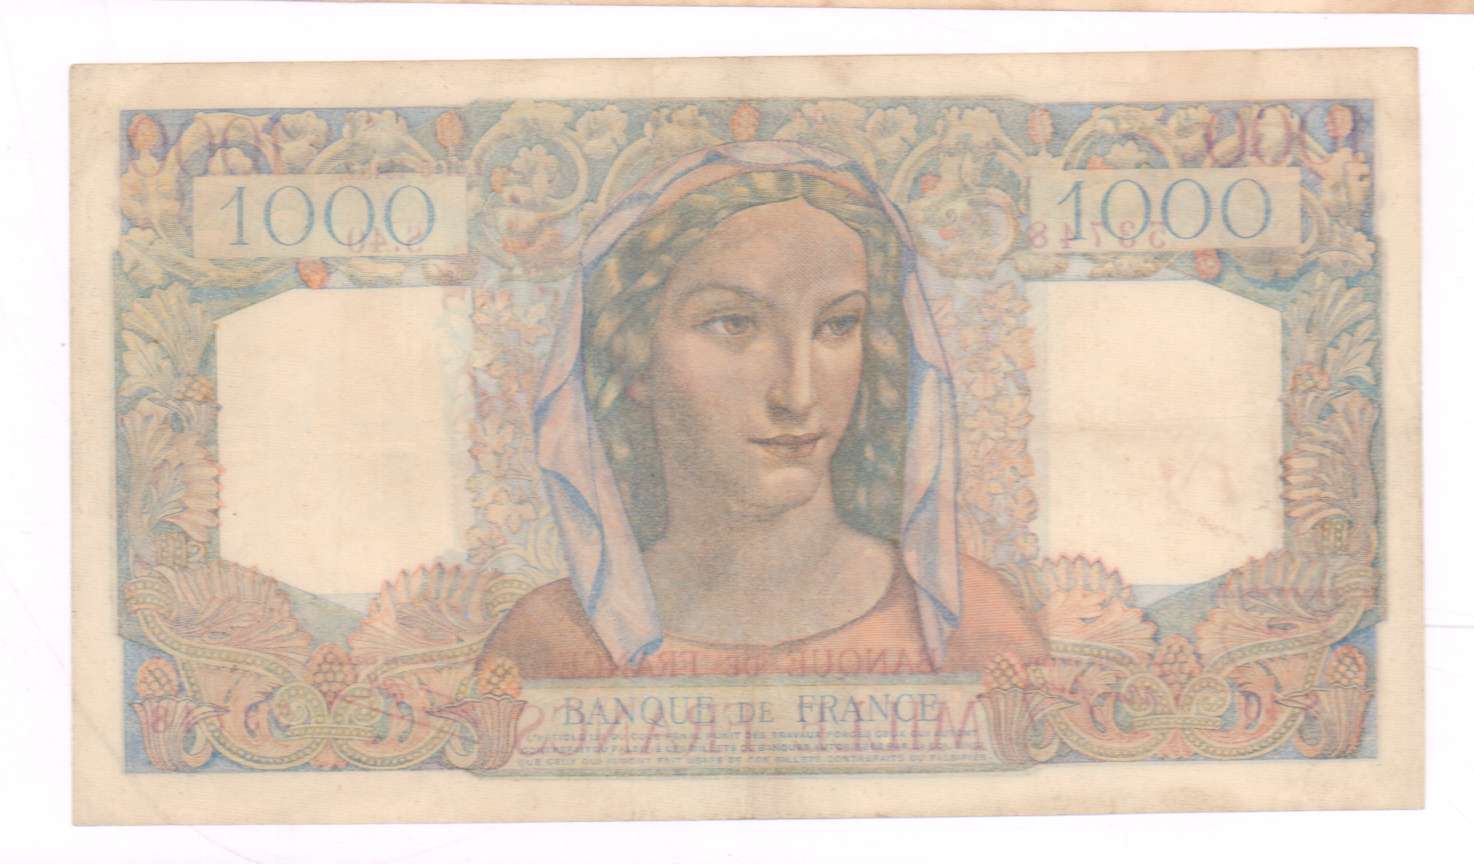 1000 франков в рублях. Франция 1000 франков 1919. Банкнота 100 Francs , Швейцария, 1941-1945, реверс. Французский Франк на сом.